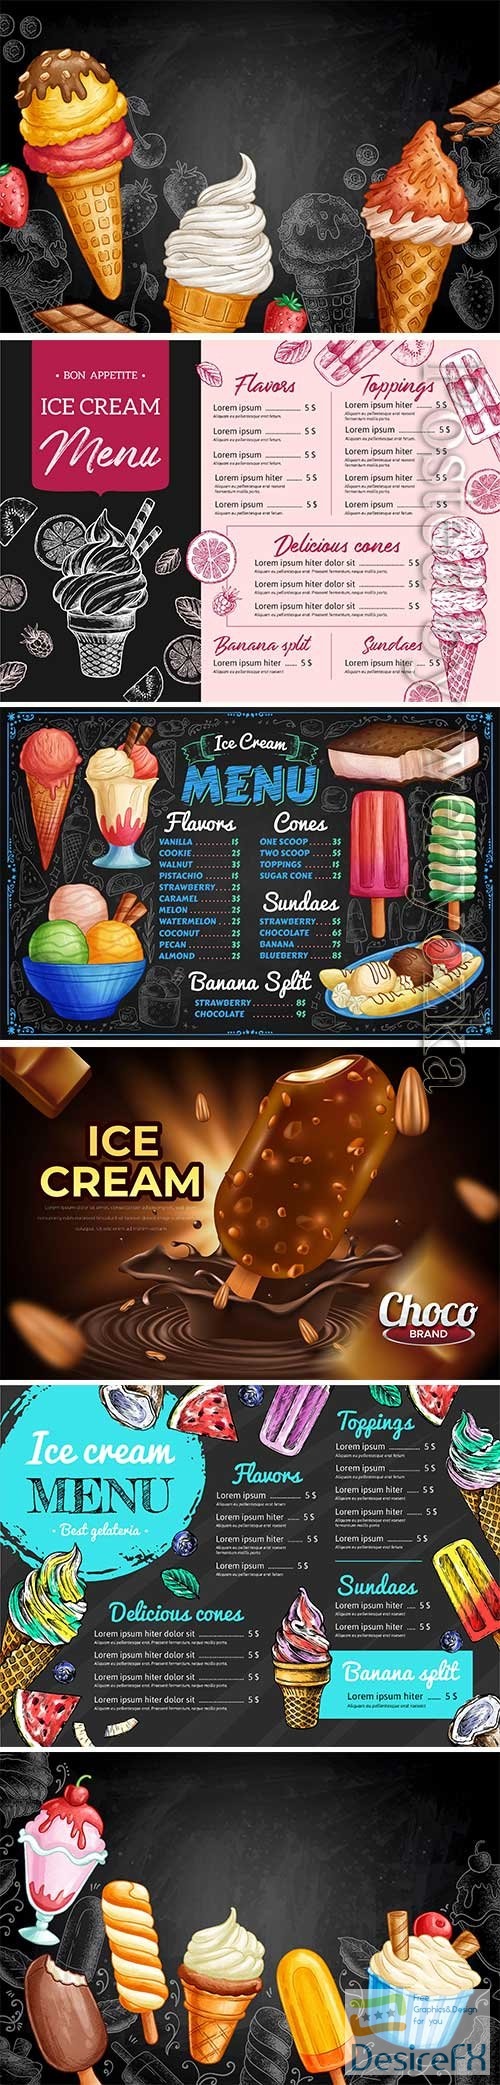 Hand drawn style ice cream blackboard vector background